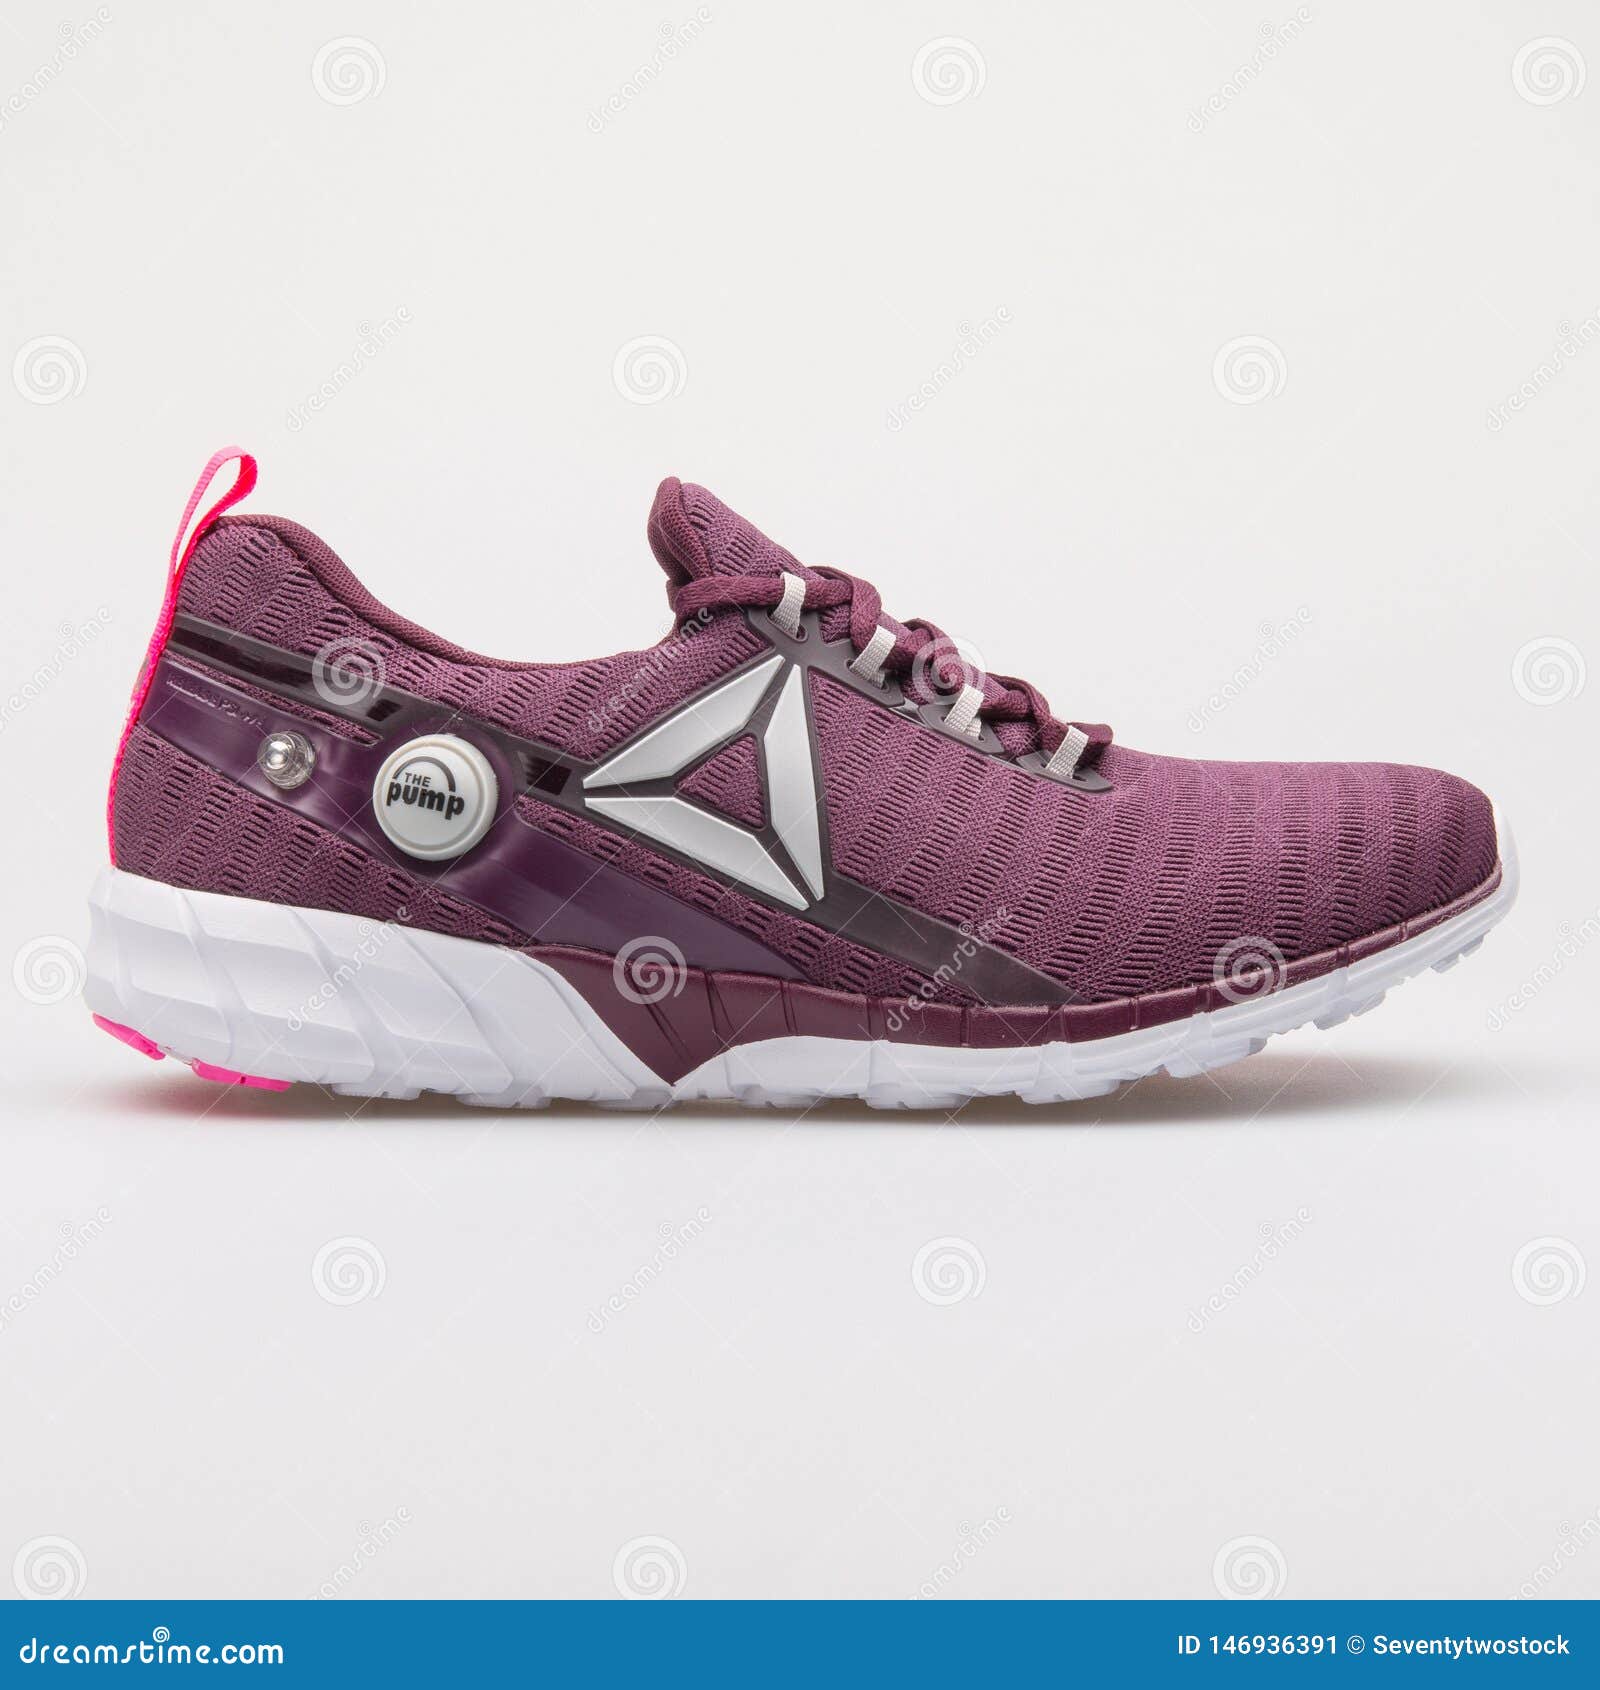 Reebok Zpump Fusion 2.5 SE Maroon Sneaker - Image of pair, shoes: 146936391